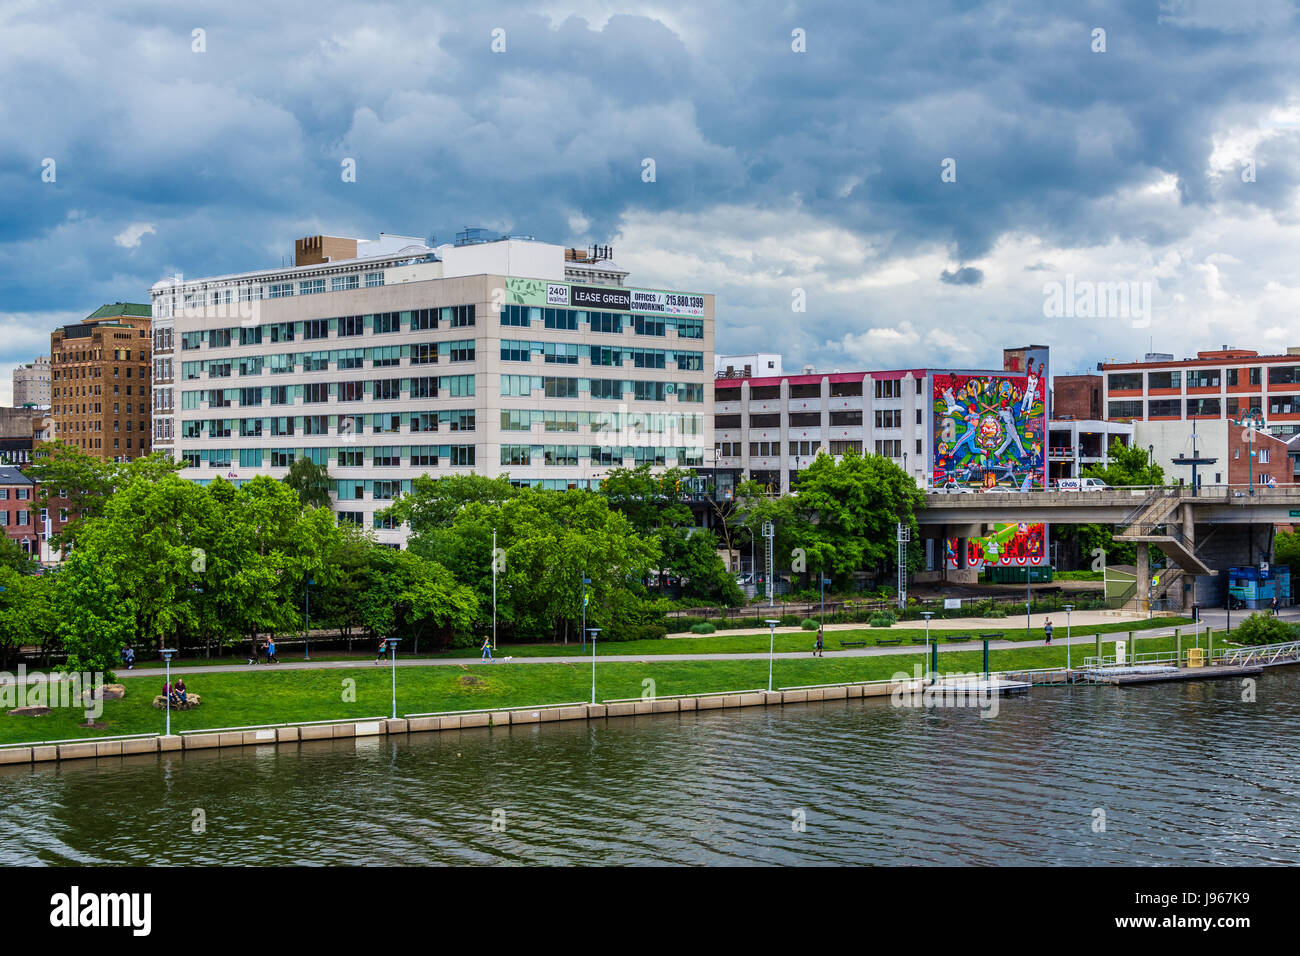 Buildings along the Schuylkill River in Philadelphia, Pennsylvania. Stock Photo